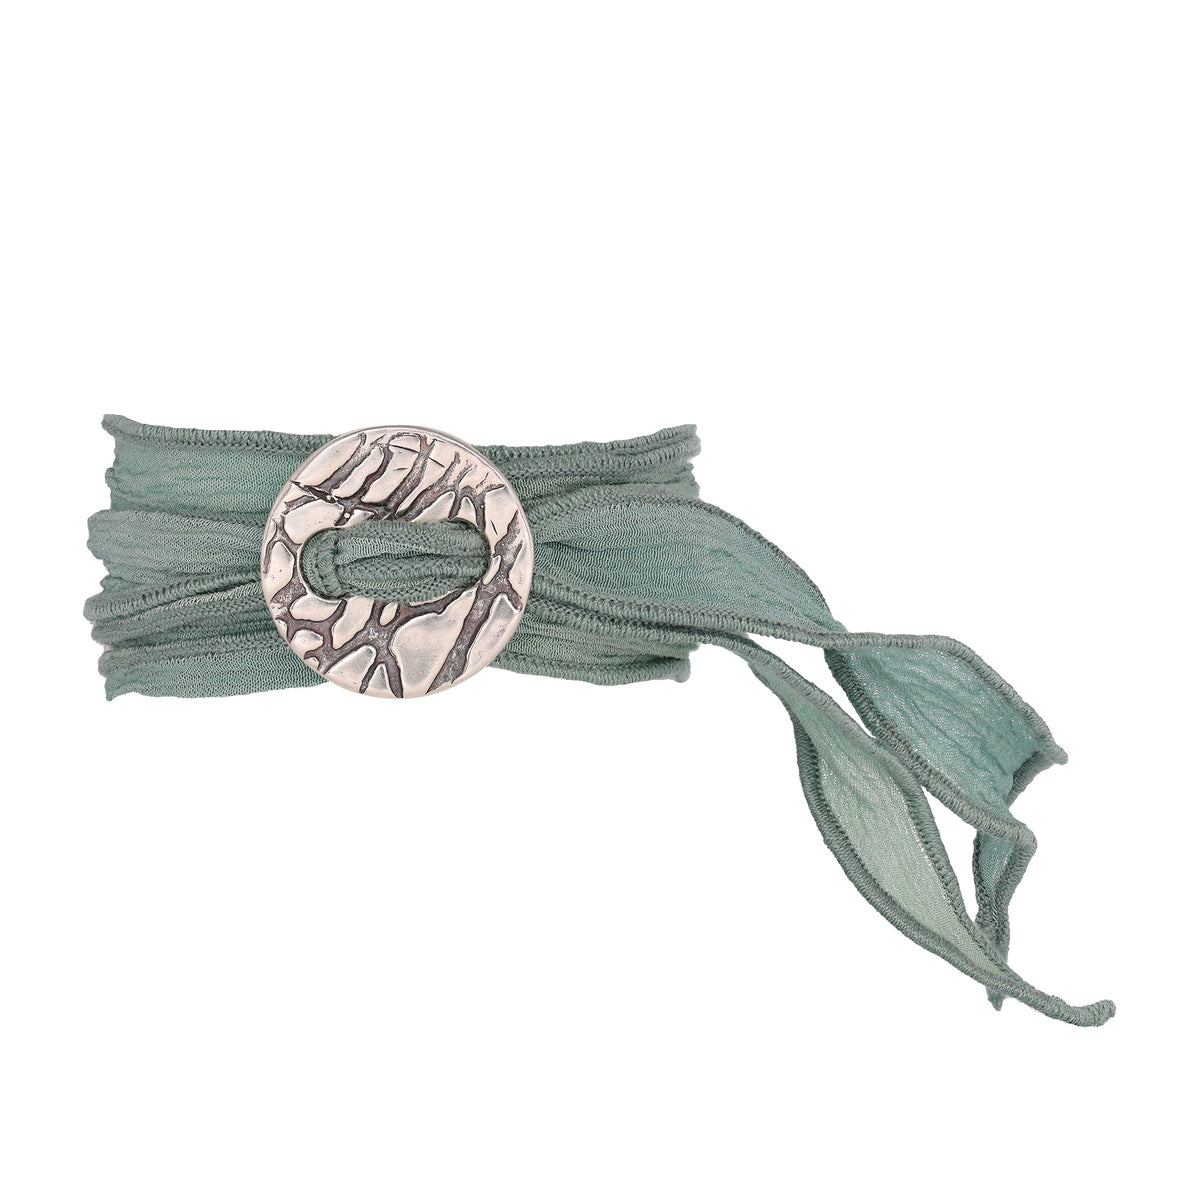 Cactus Skeleton Textured Sterling Silver Silk Wrist Wrap Bracelet